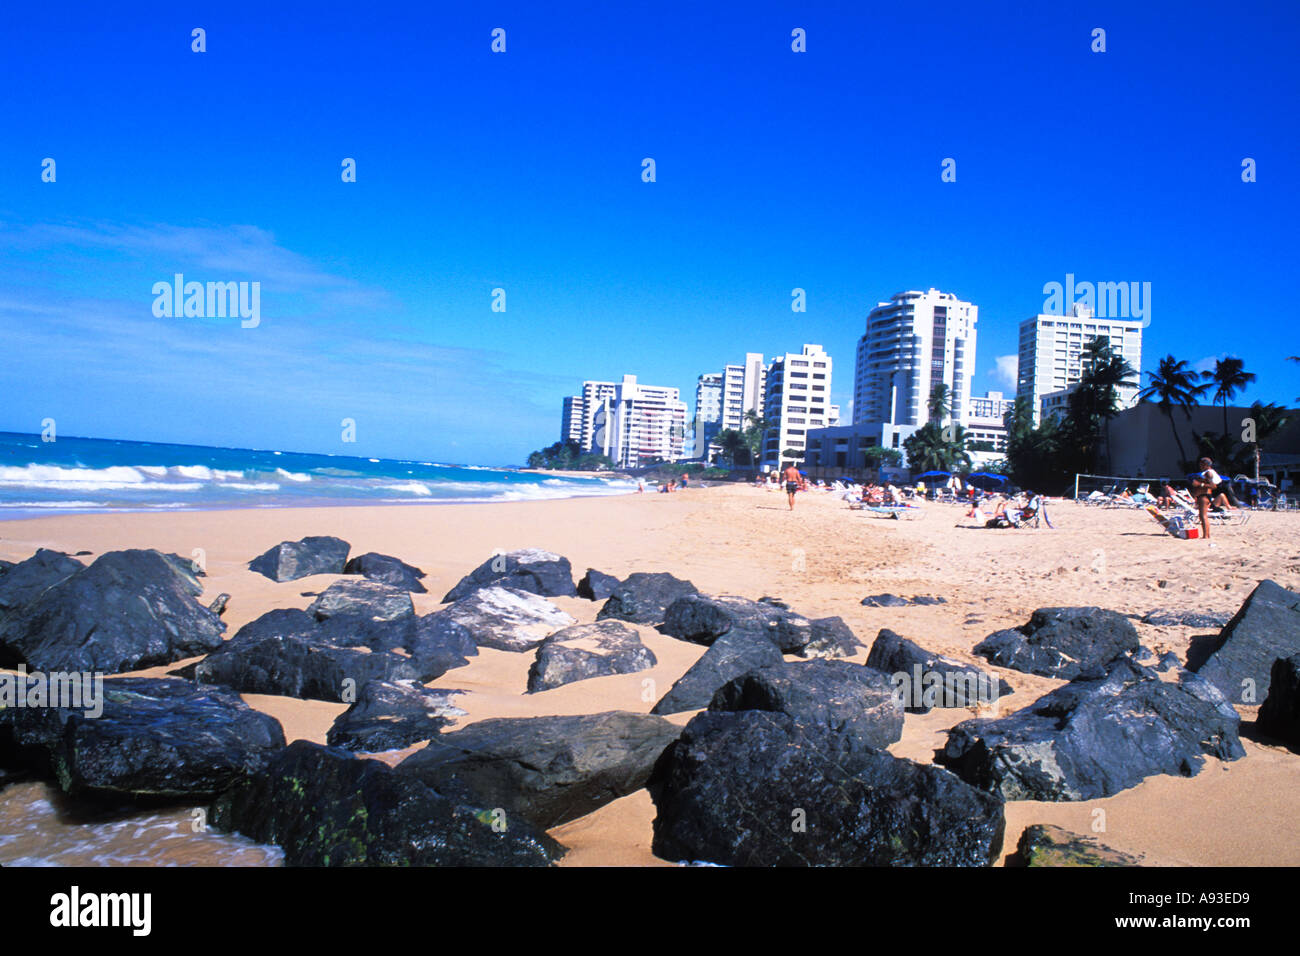 Condado Beach hotel district in San Juan Puerto Rico Stock Photo